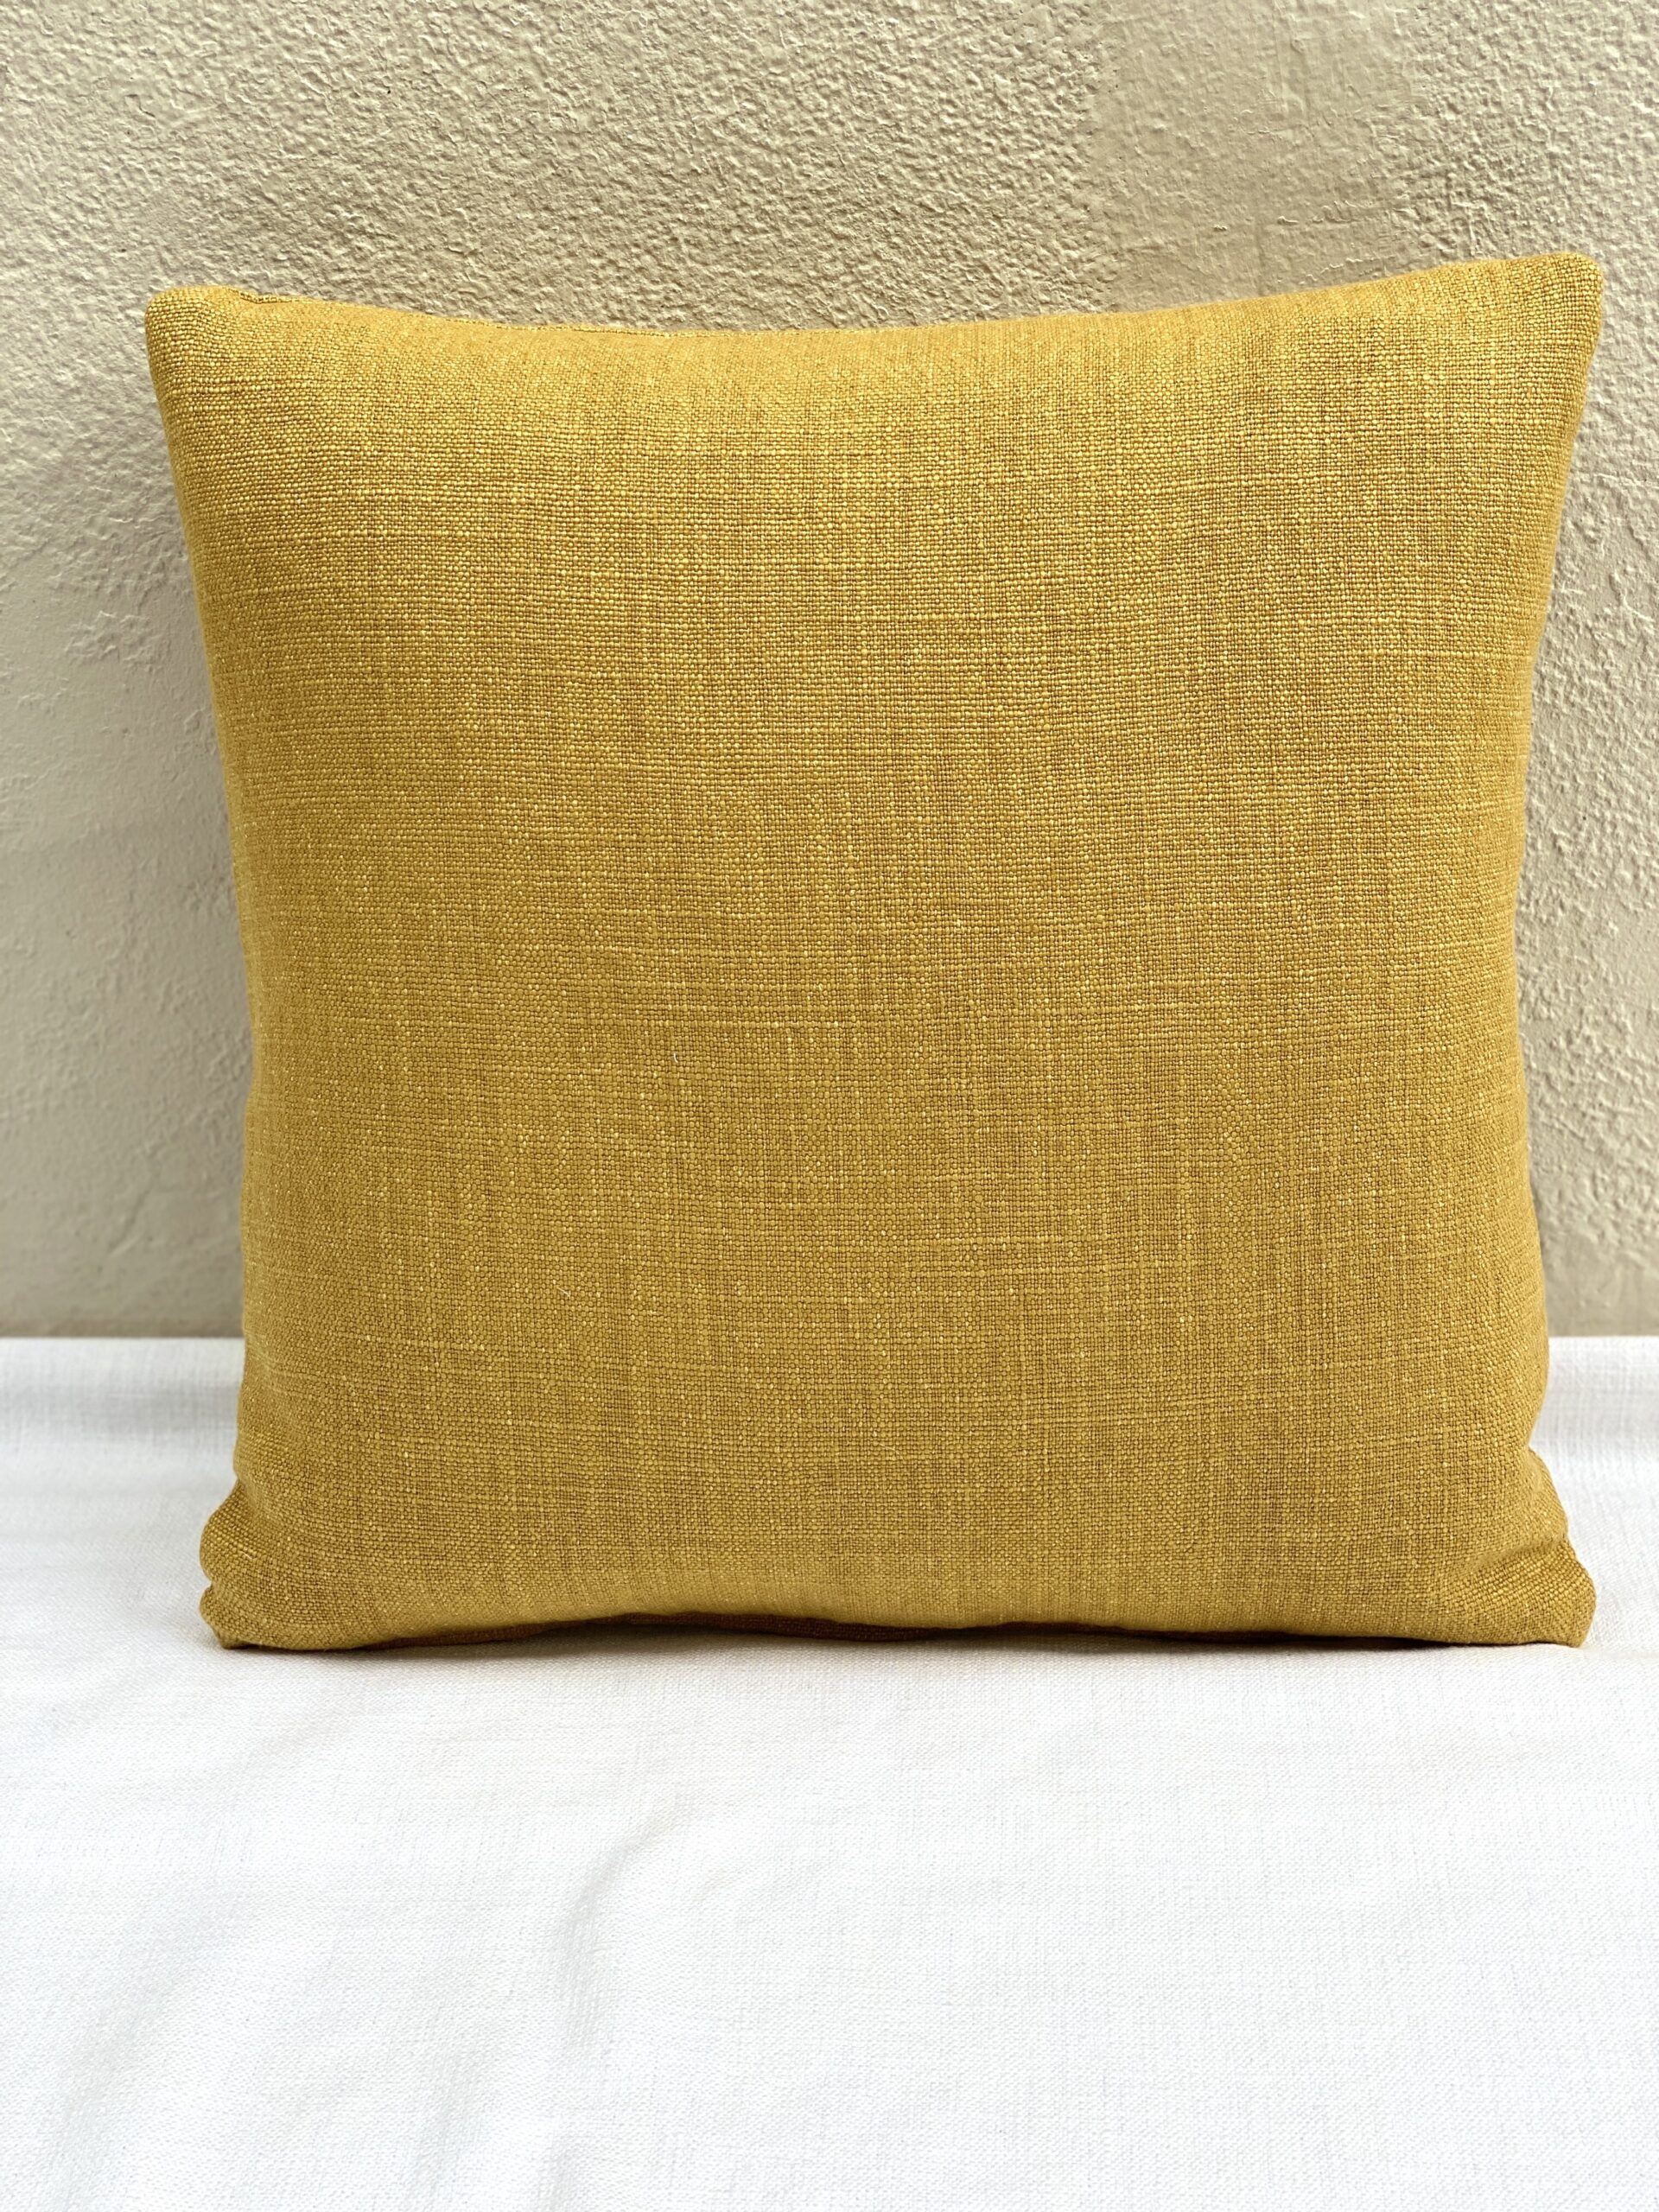 Pierre Frey Craft Pillows